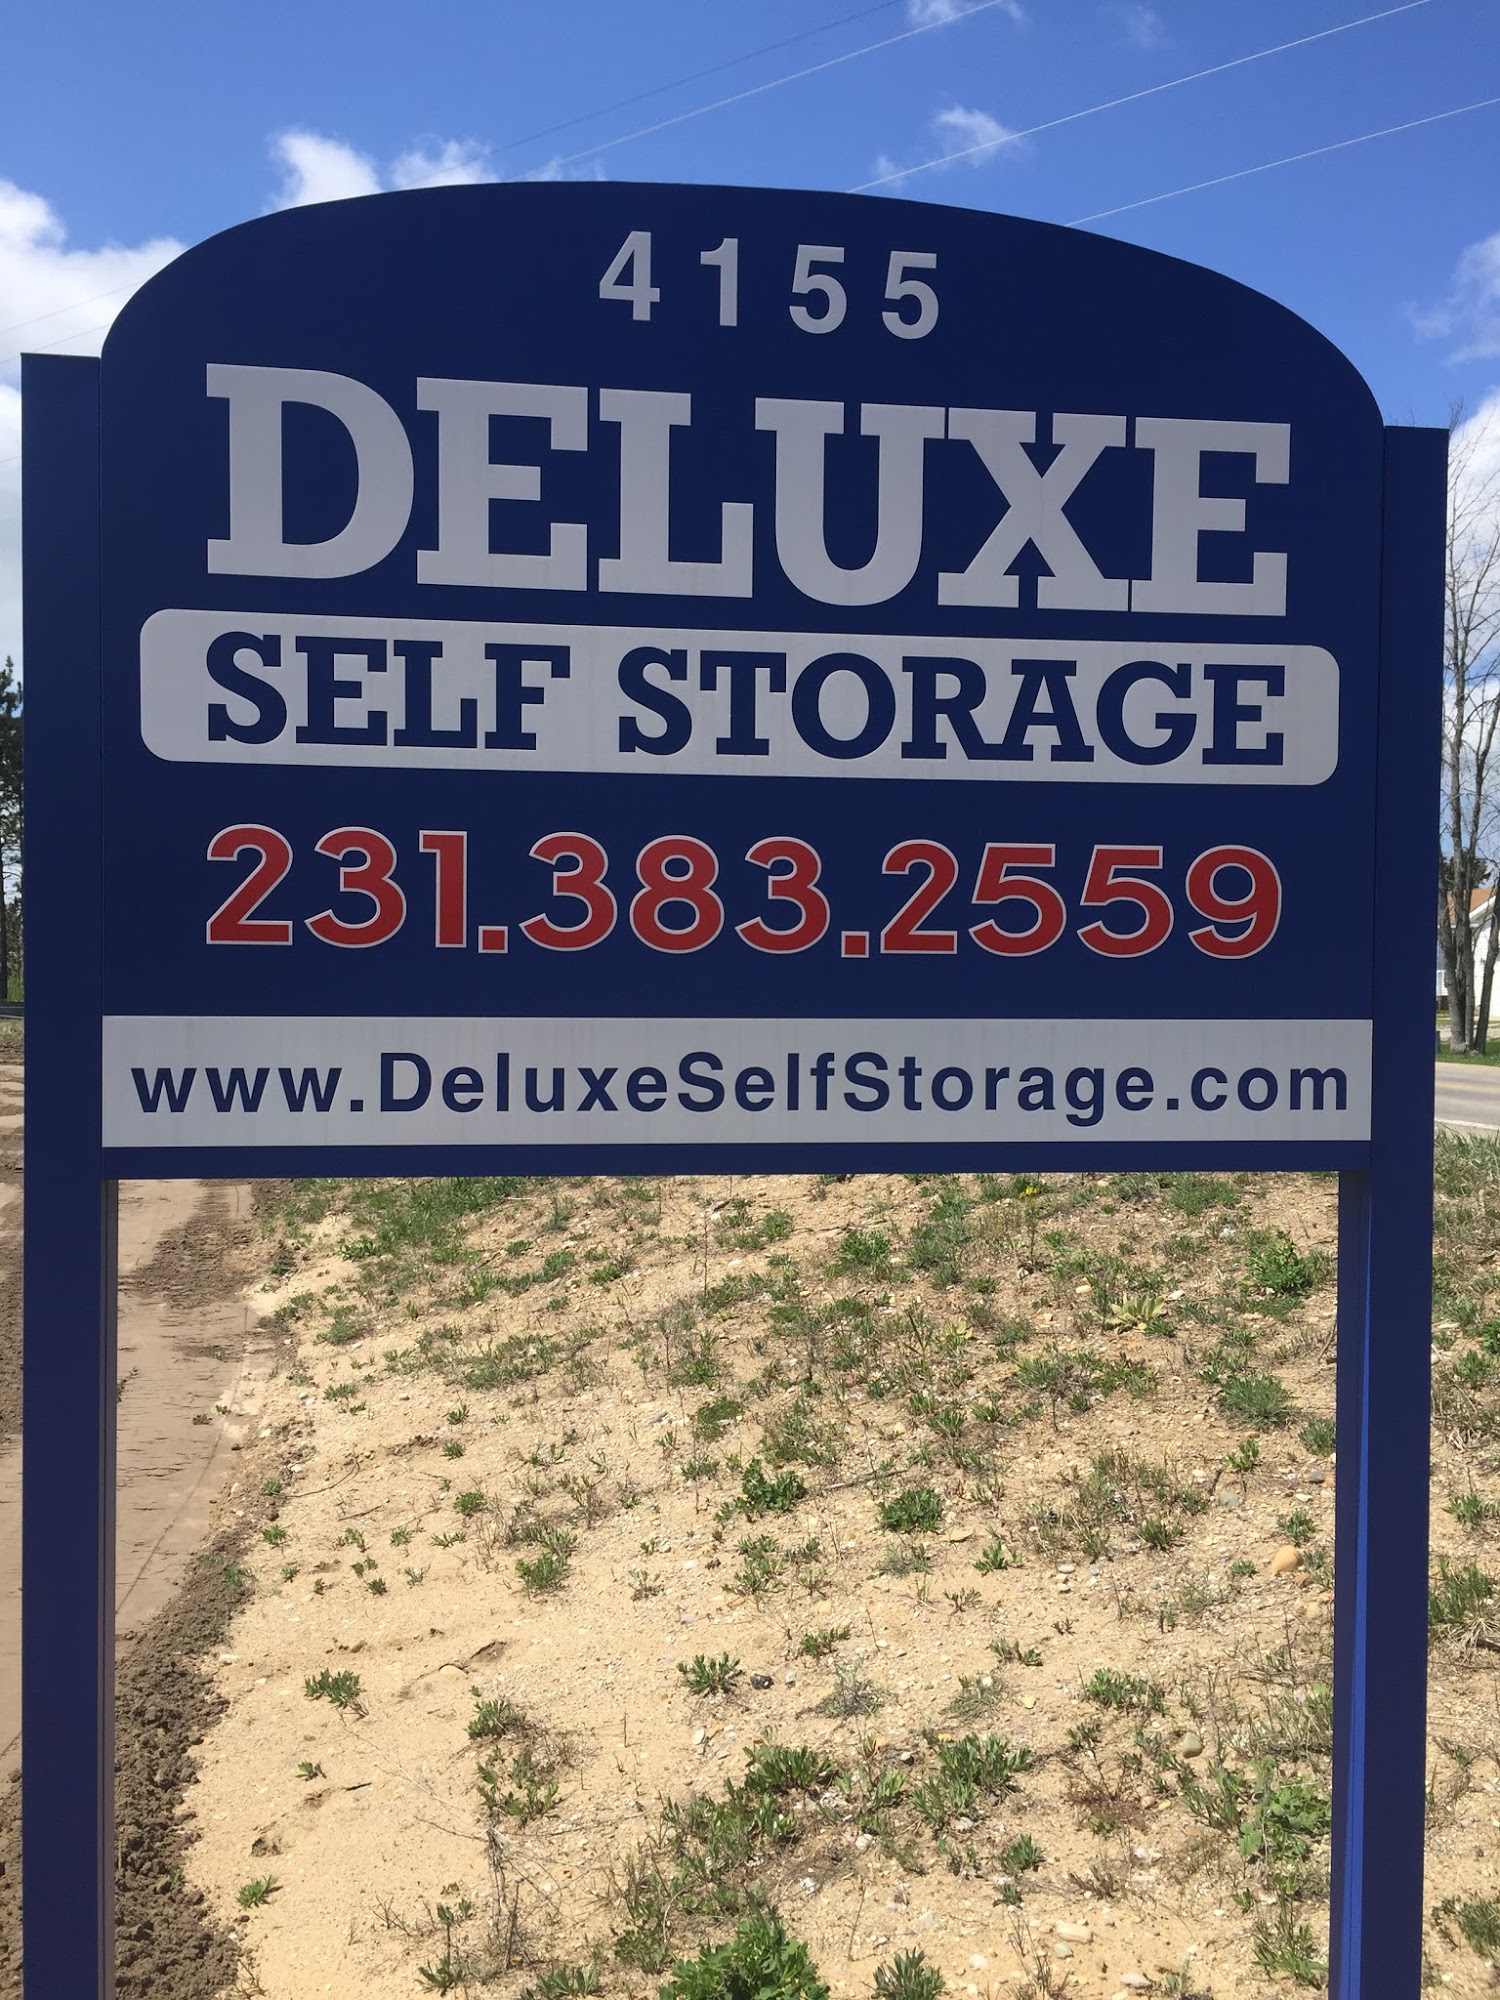 Deluxe Self Storage, LLC